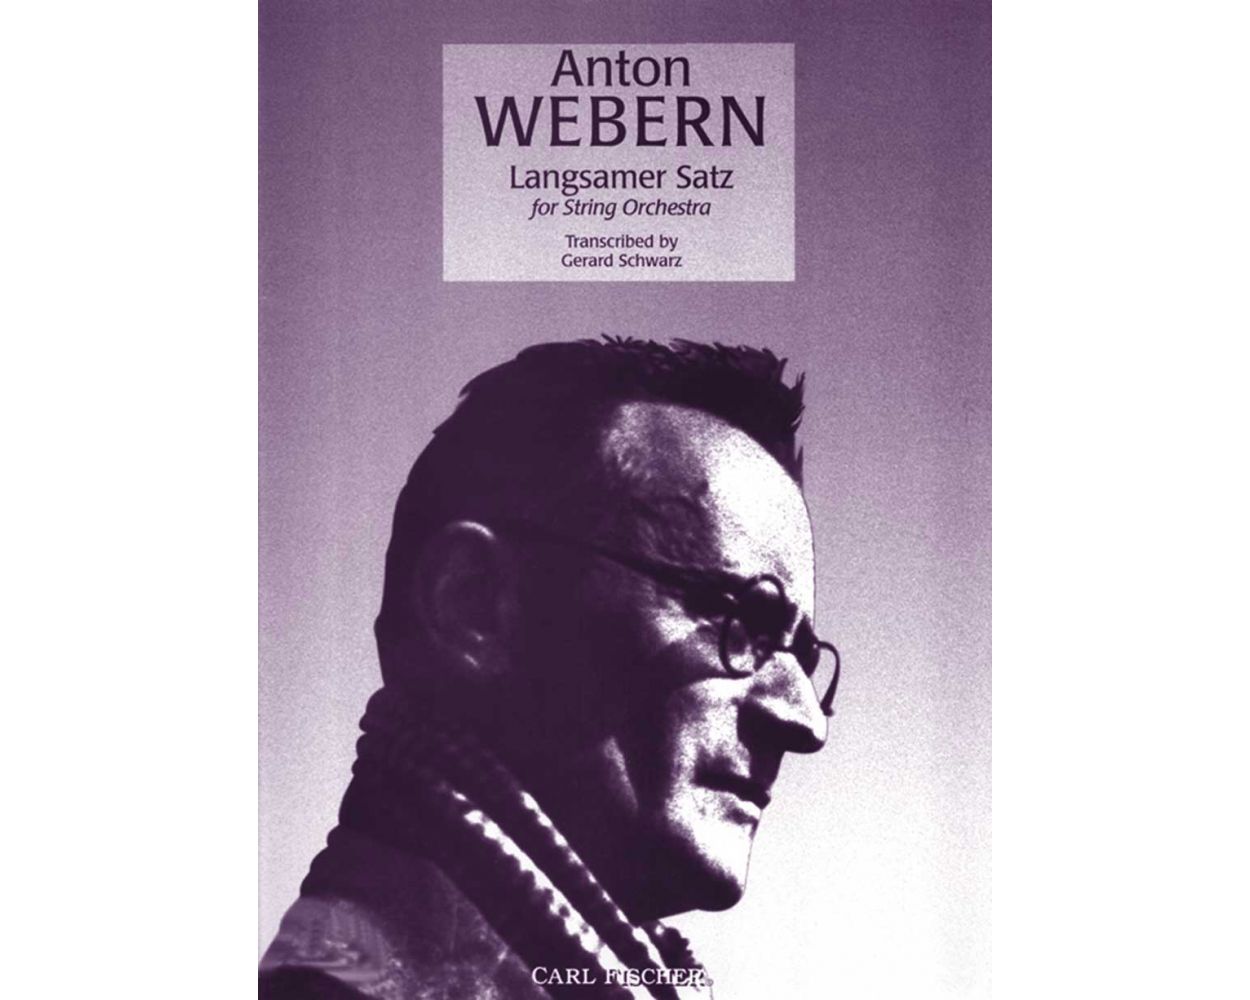 Webern Langsamer Satz for String Orchestra